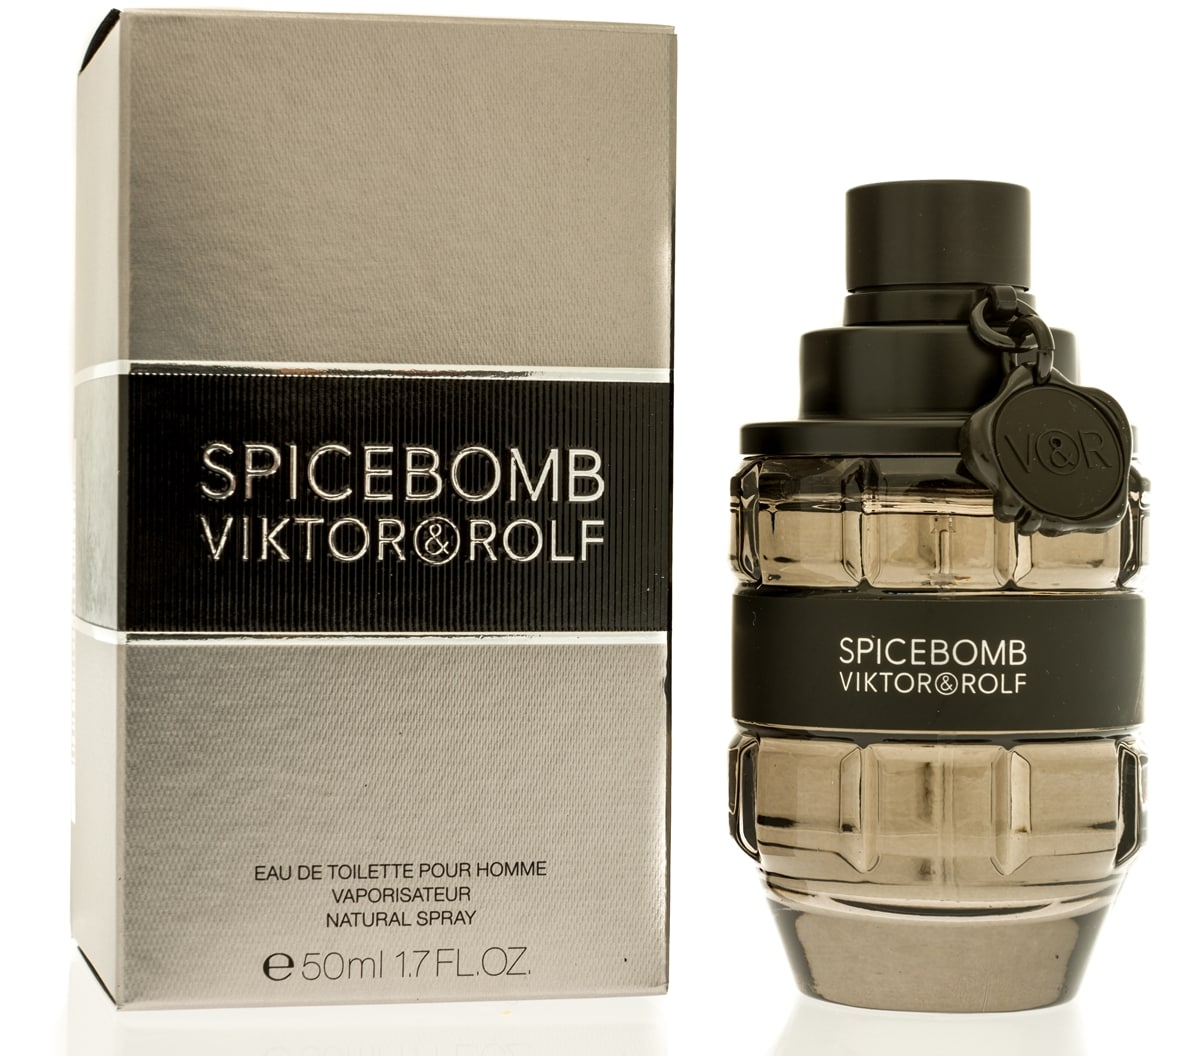 Spicebomb (2012): A bold, masculine fragrance by Viktor & Rolf